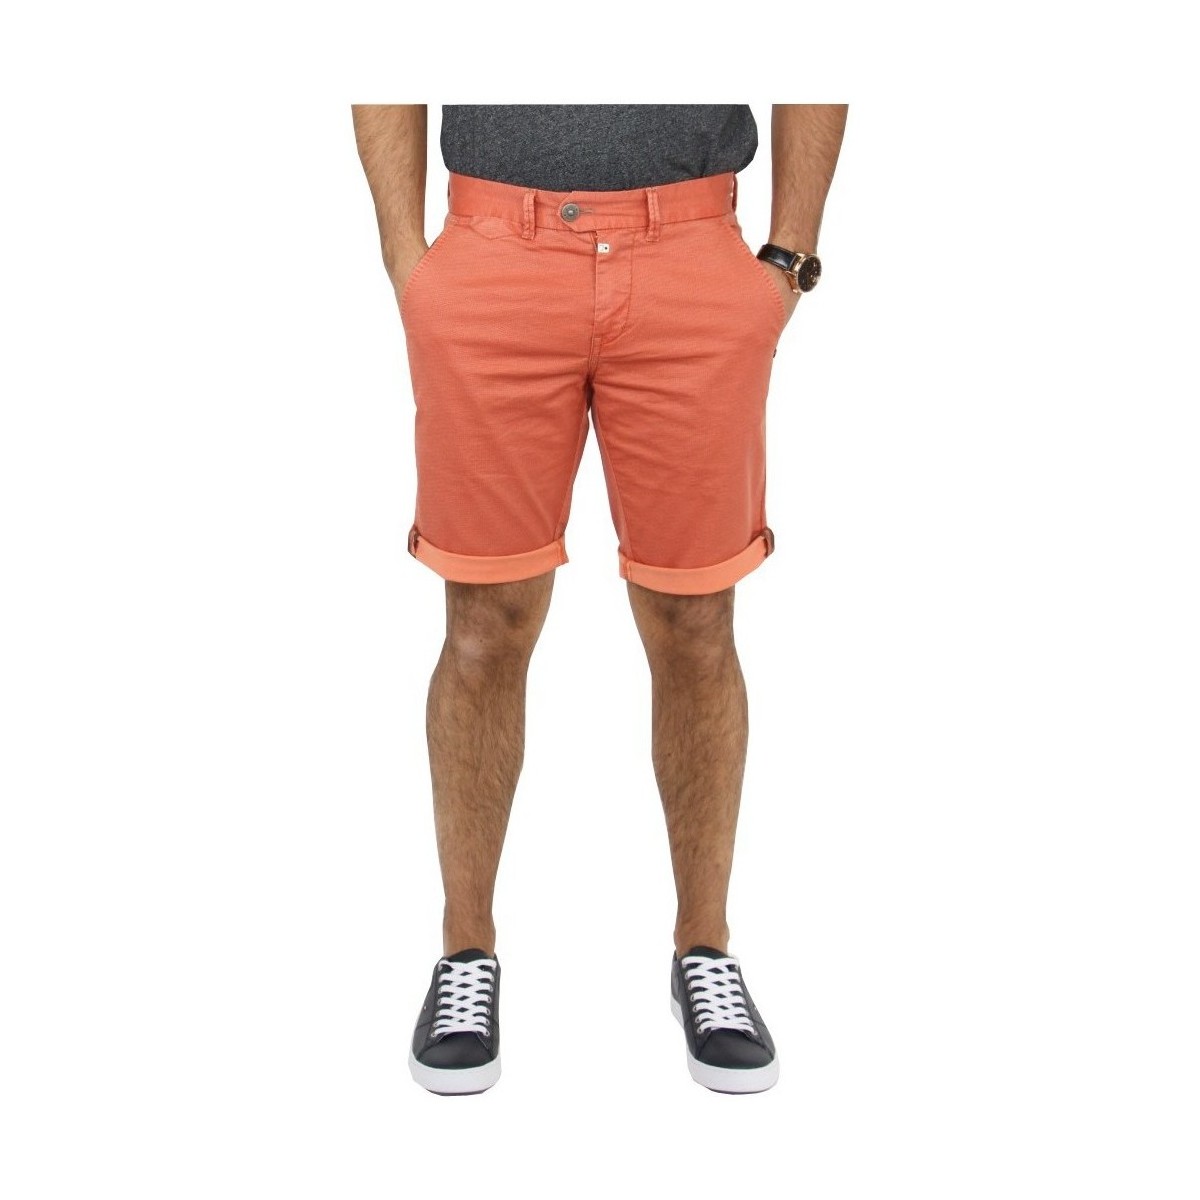 Vêtements Homme Shorts / Bermudas Timezone Bermuda  ref_46252 5059 Orange Orange